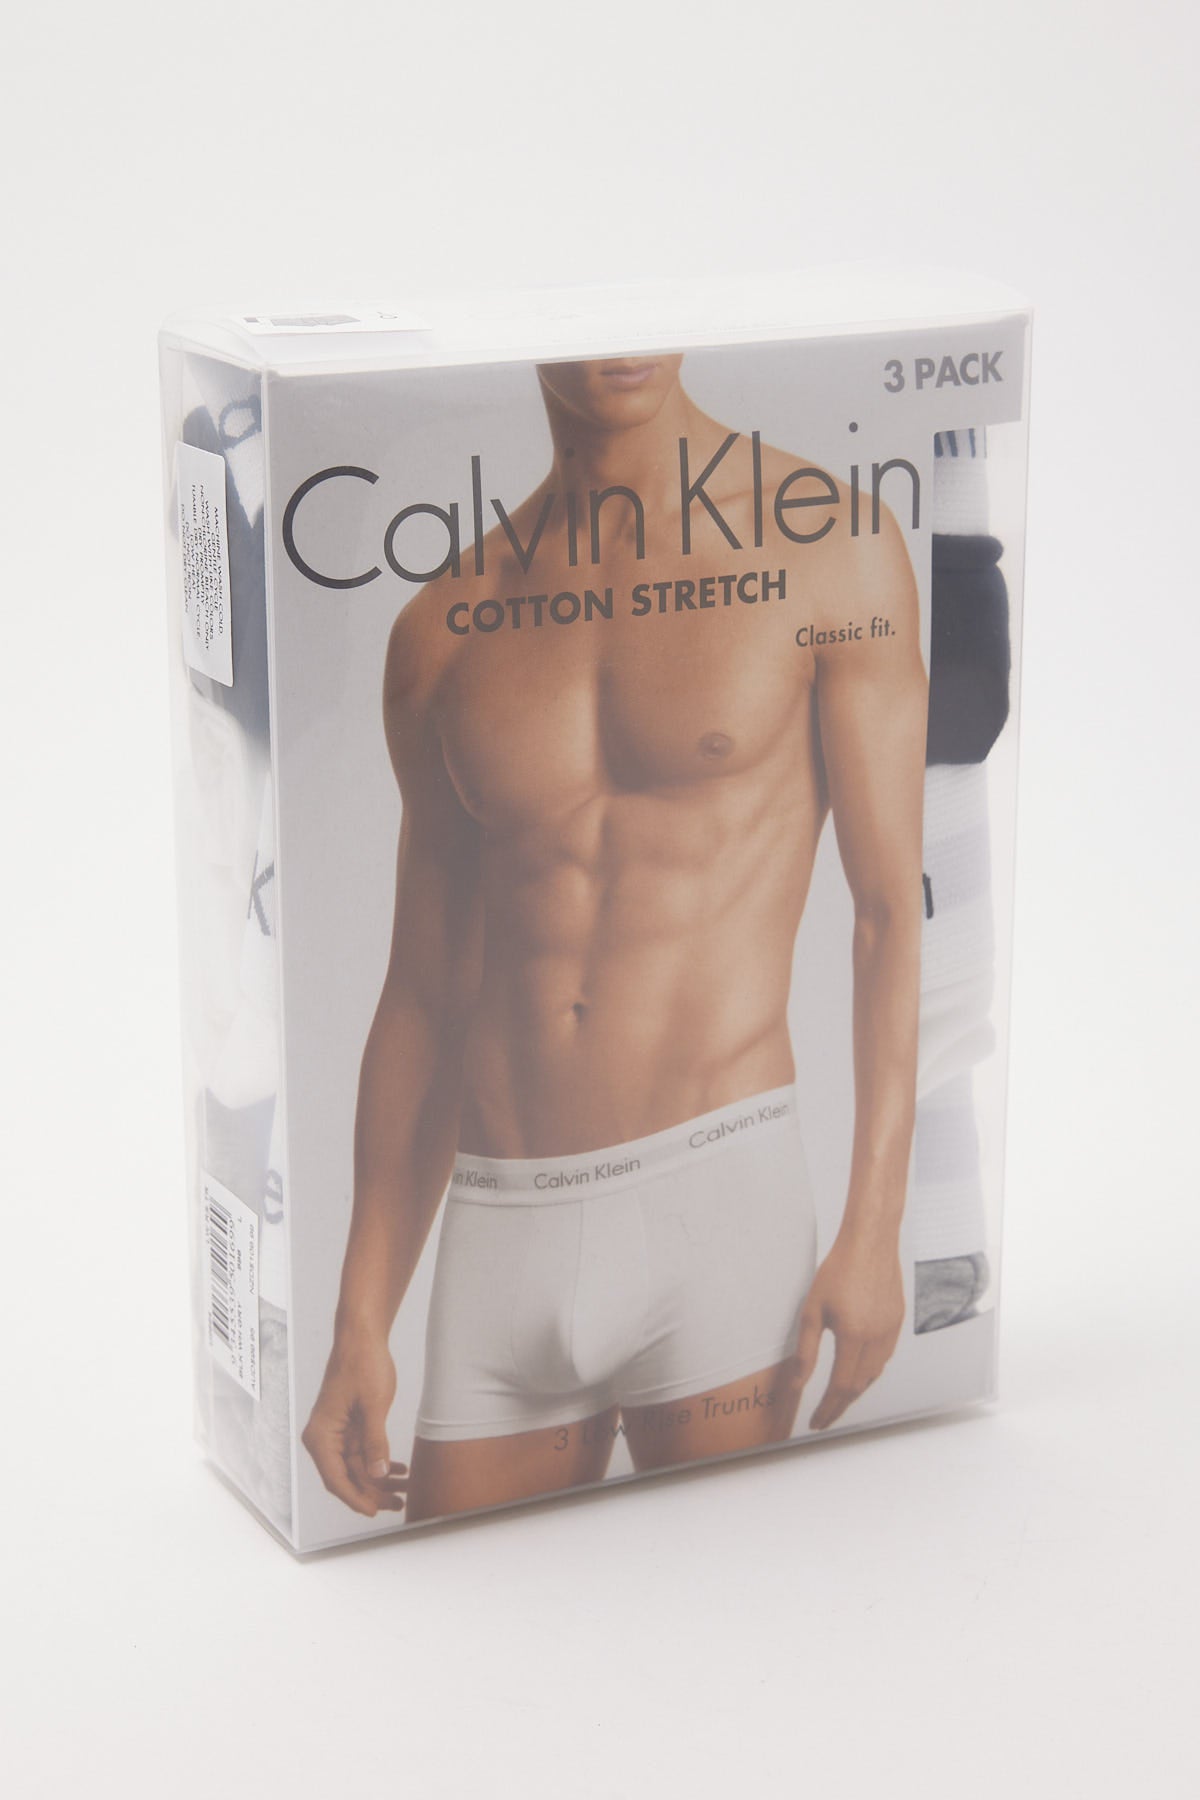 Calvin Klein Cotton Stretch Trunk 3 Pack Assorted